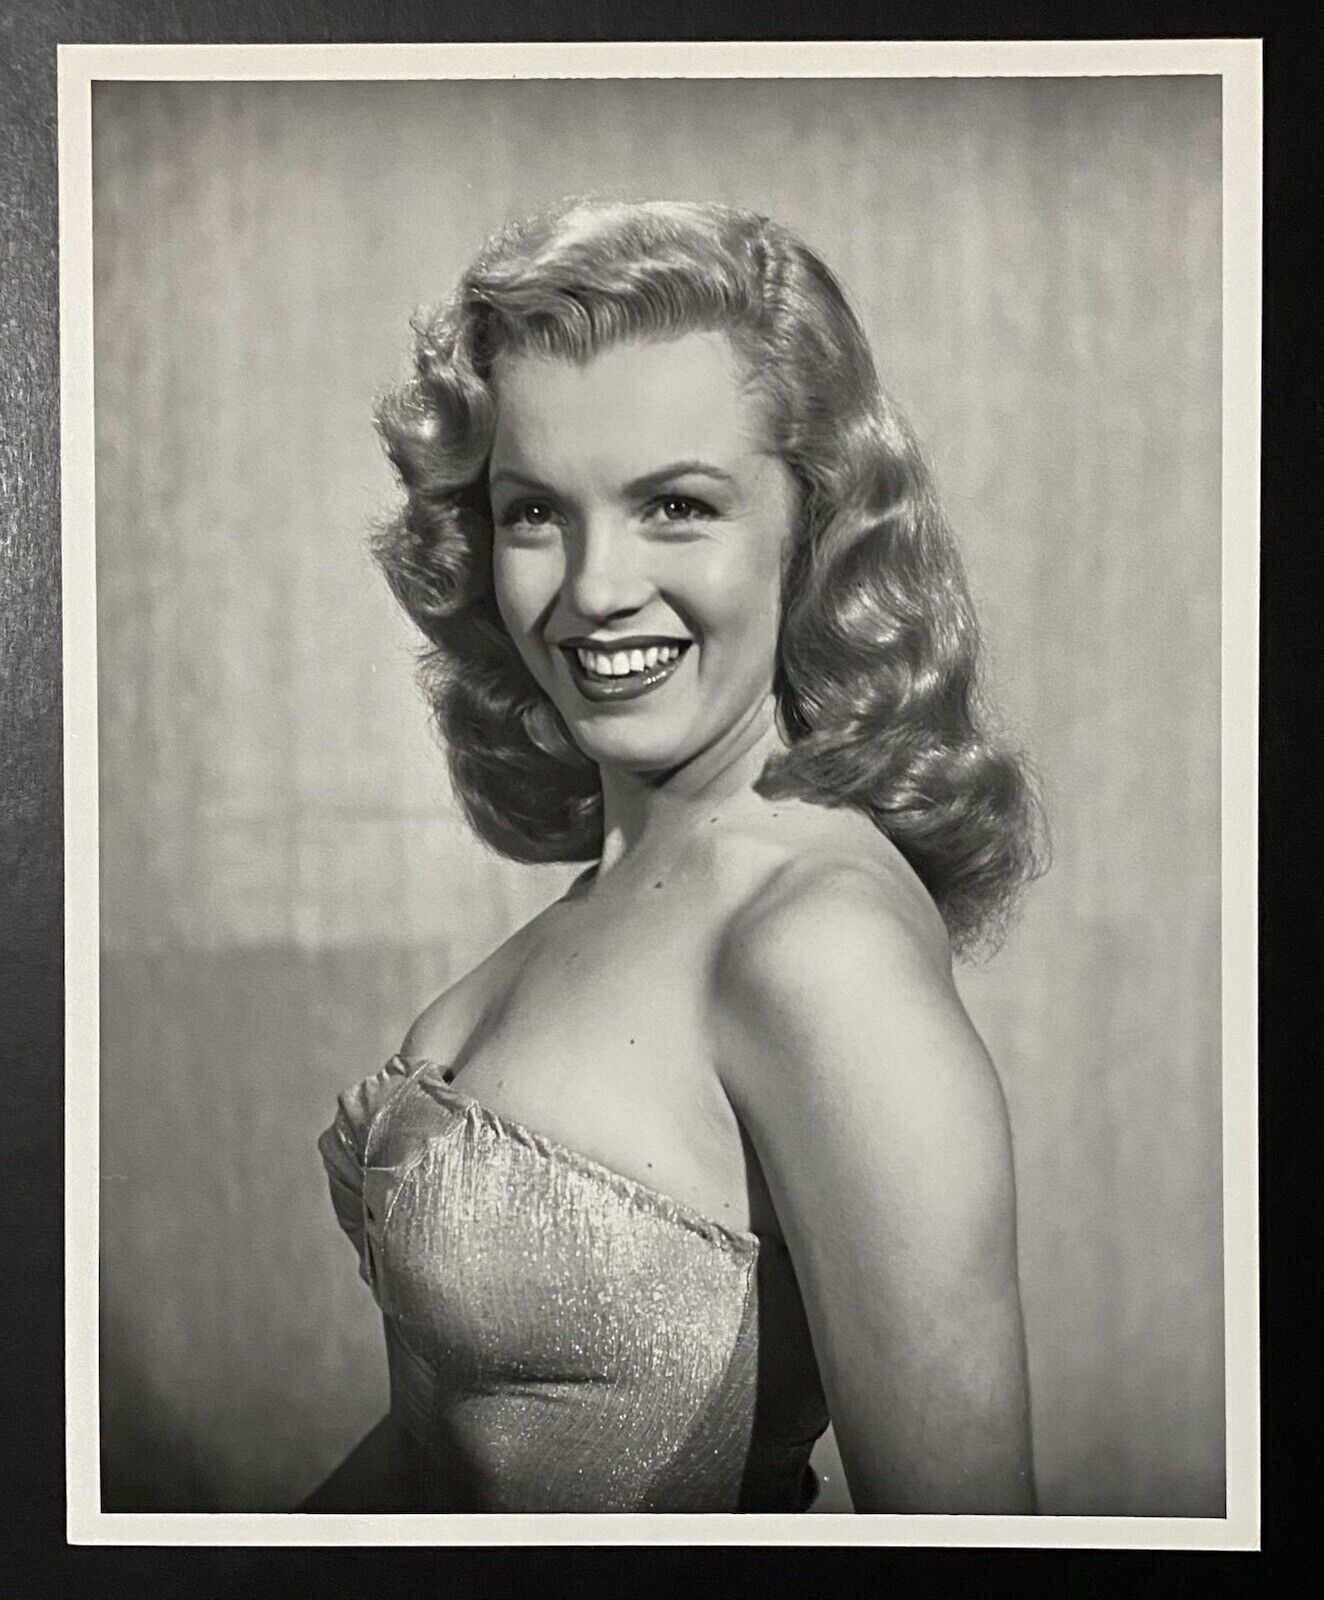 1949 Marilyn Monroe Original Photograph Love Happy Glamour Pinup